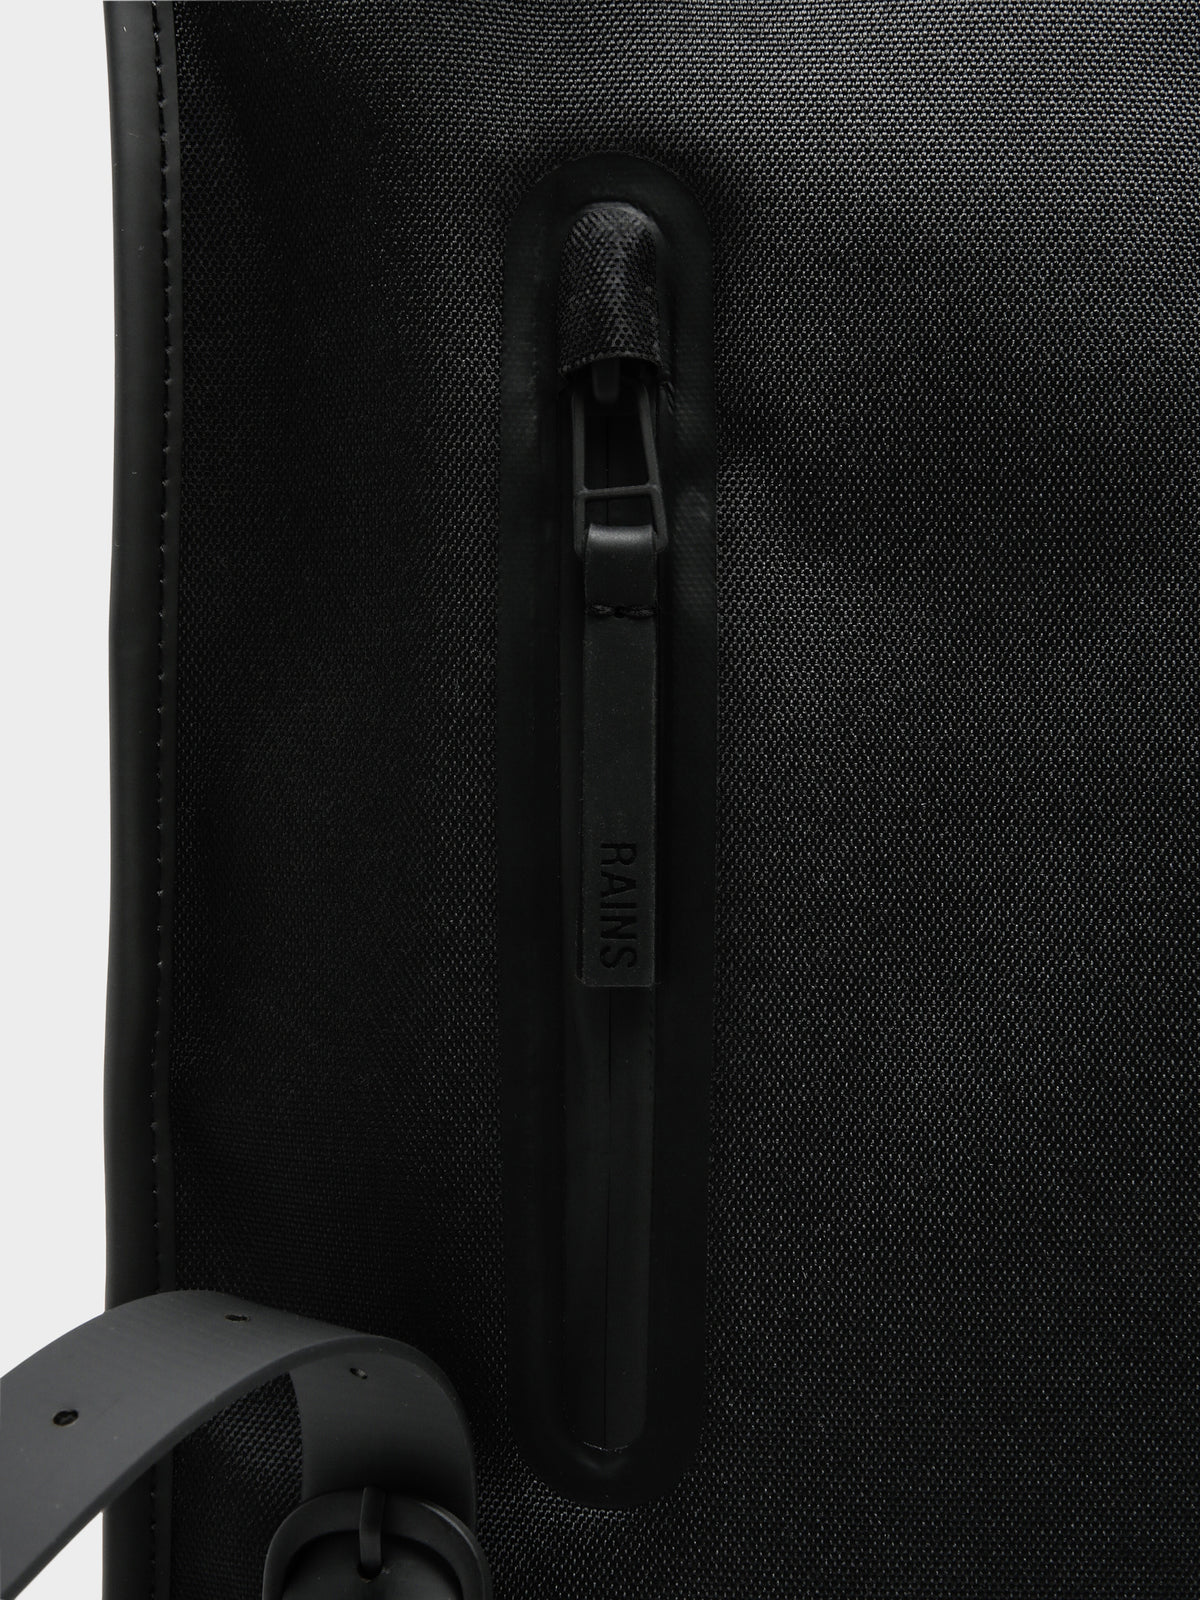 Mini Backpack in Black